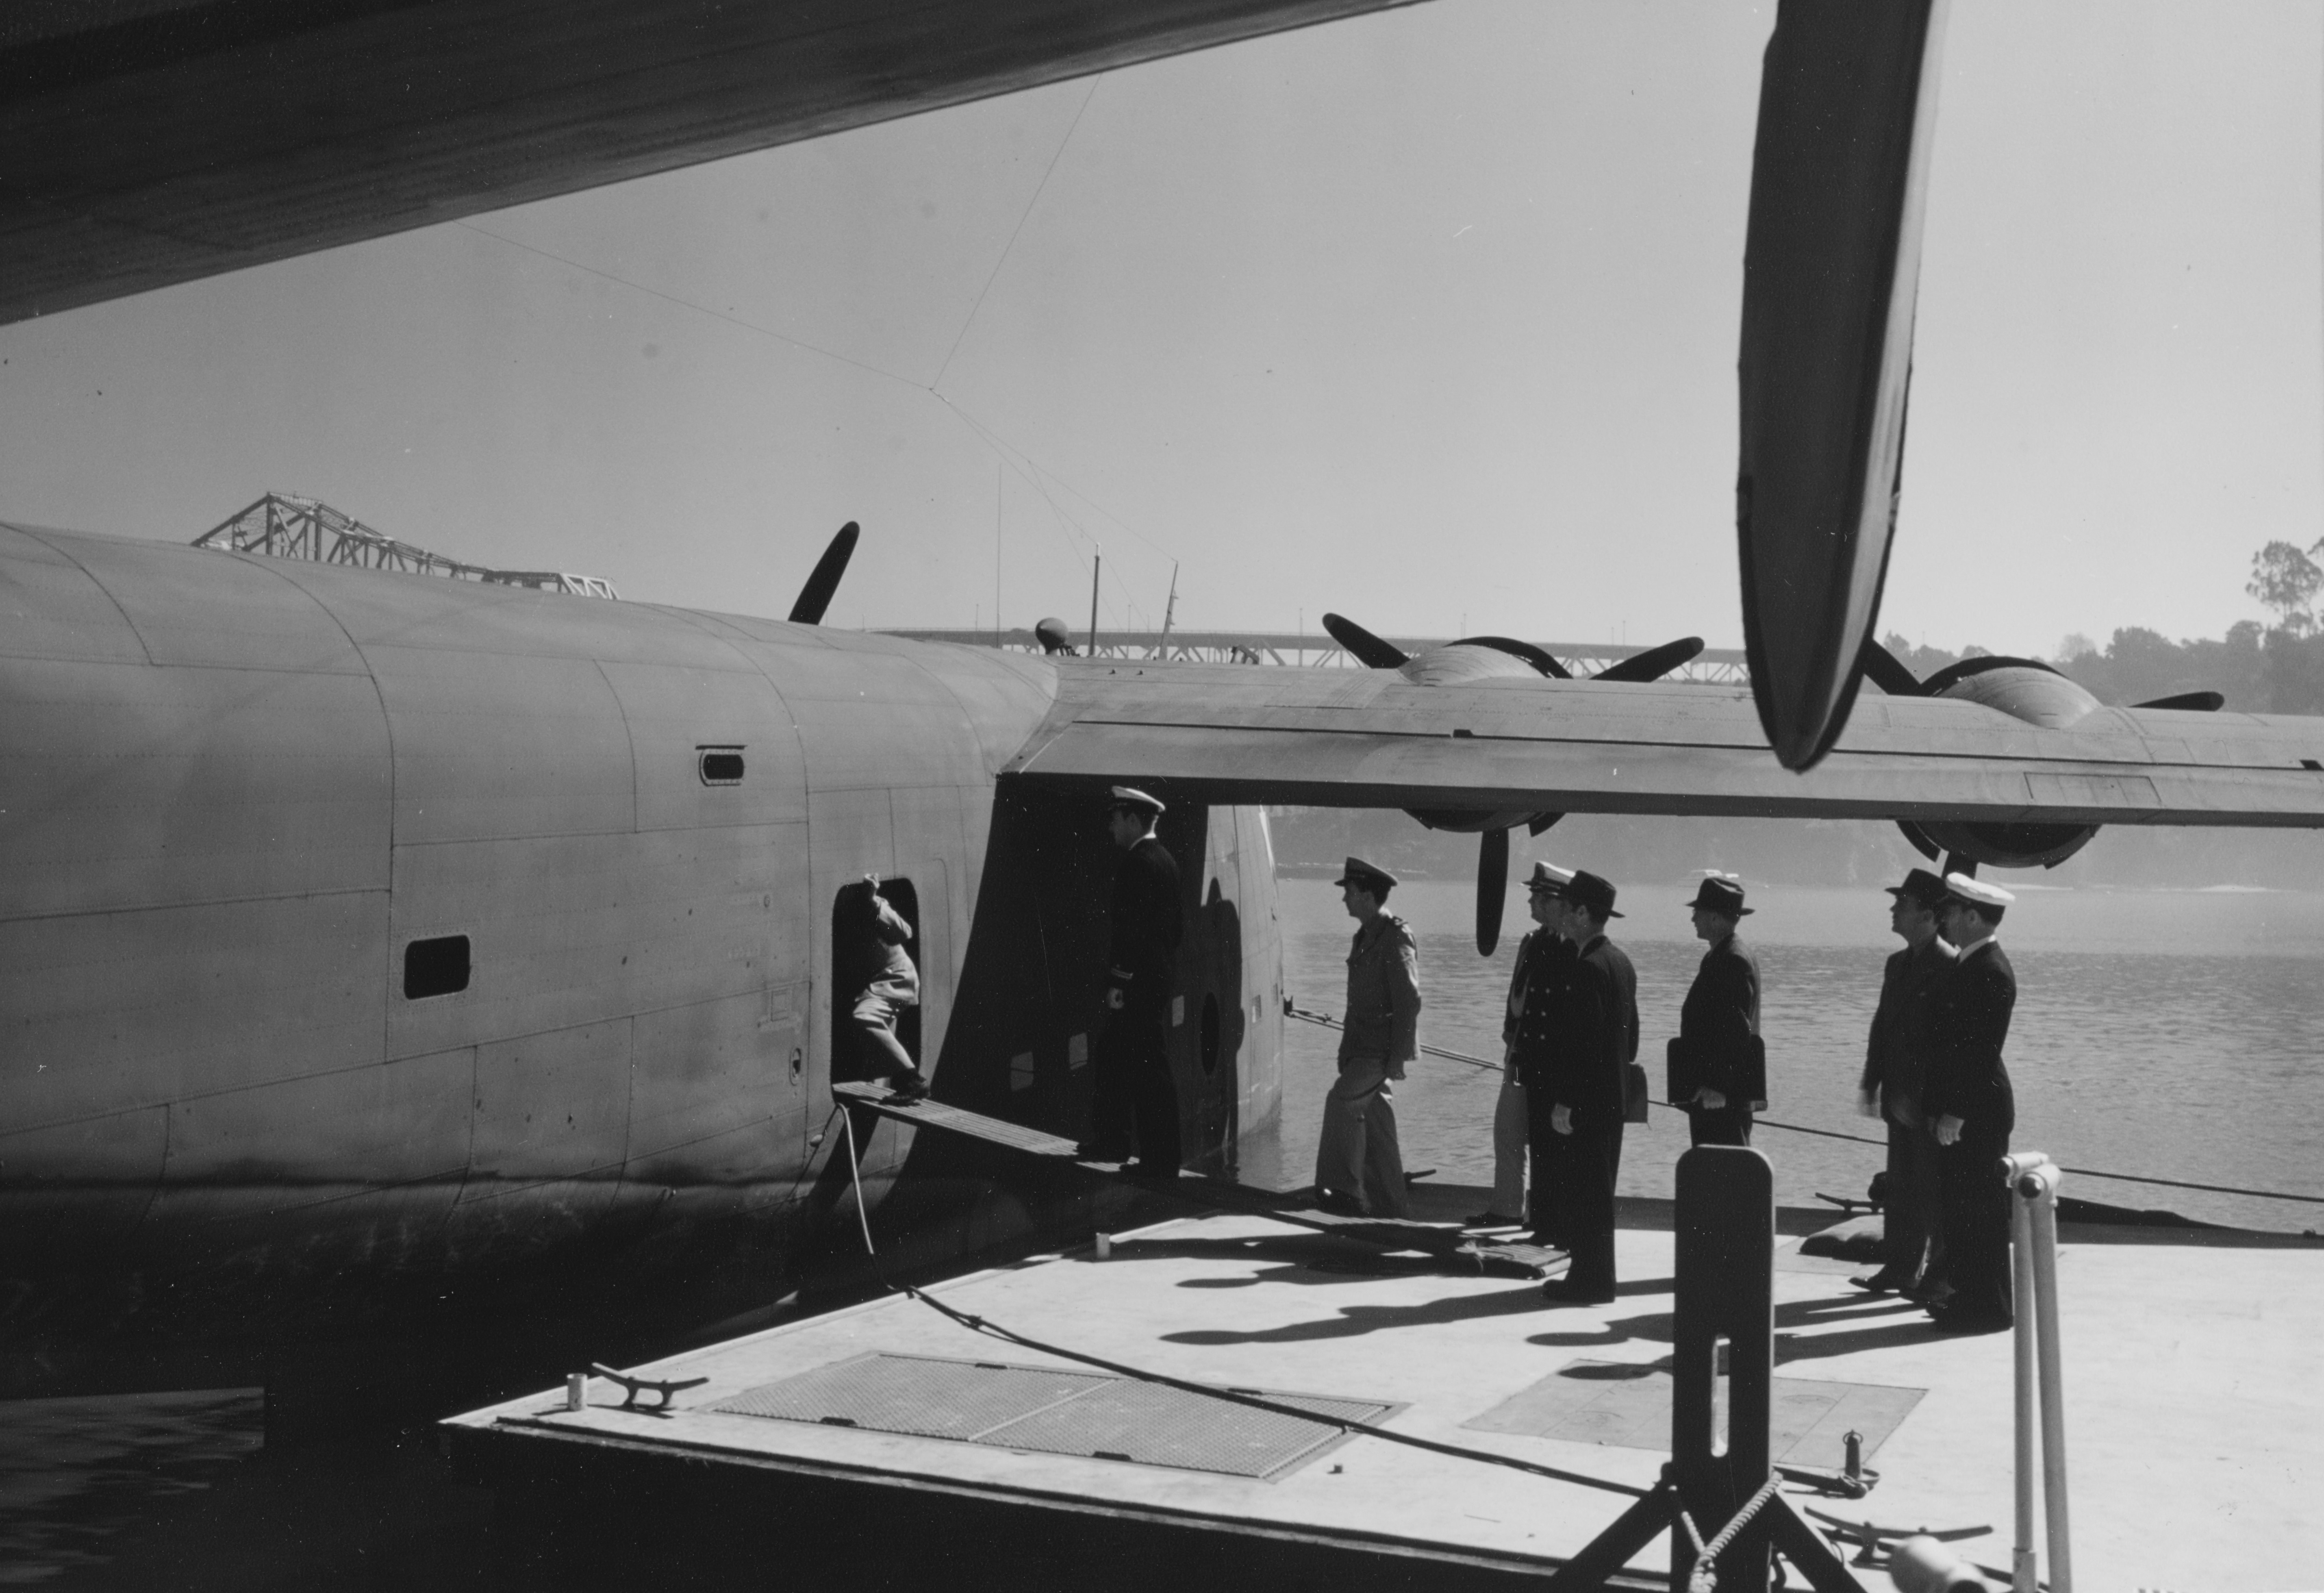 Consolidated PB2Y-3 R "Coronado" transport aircraft